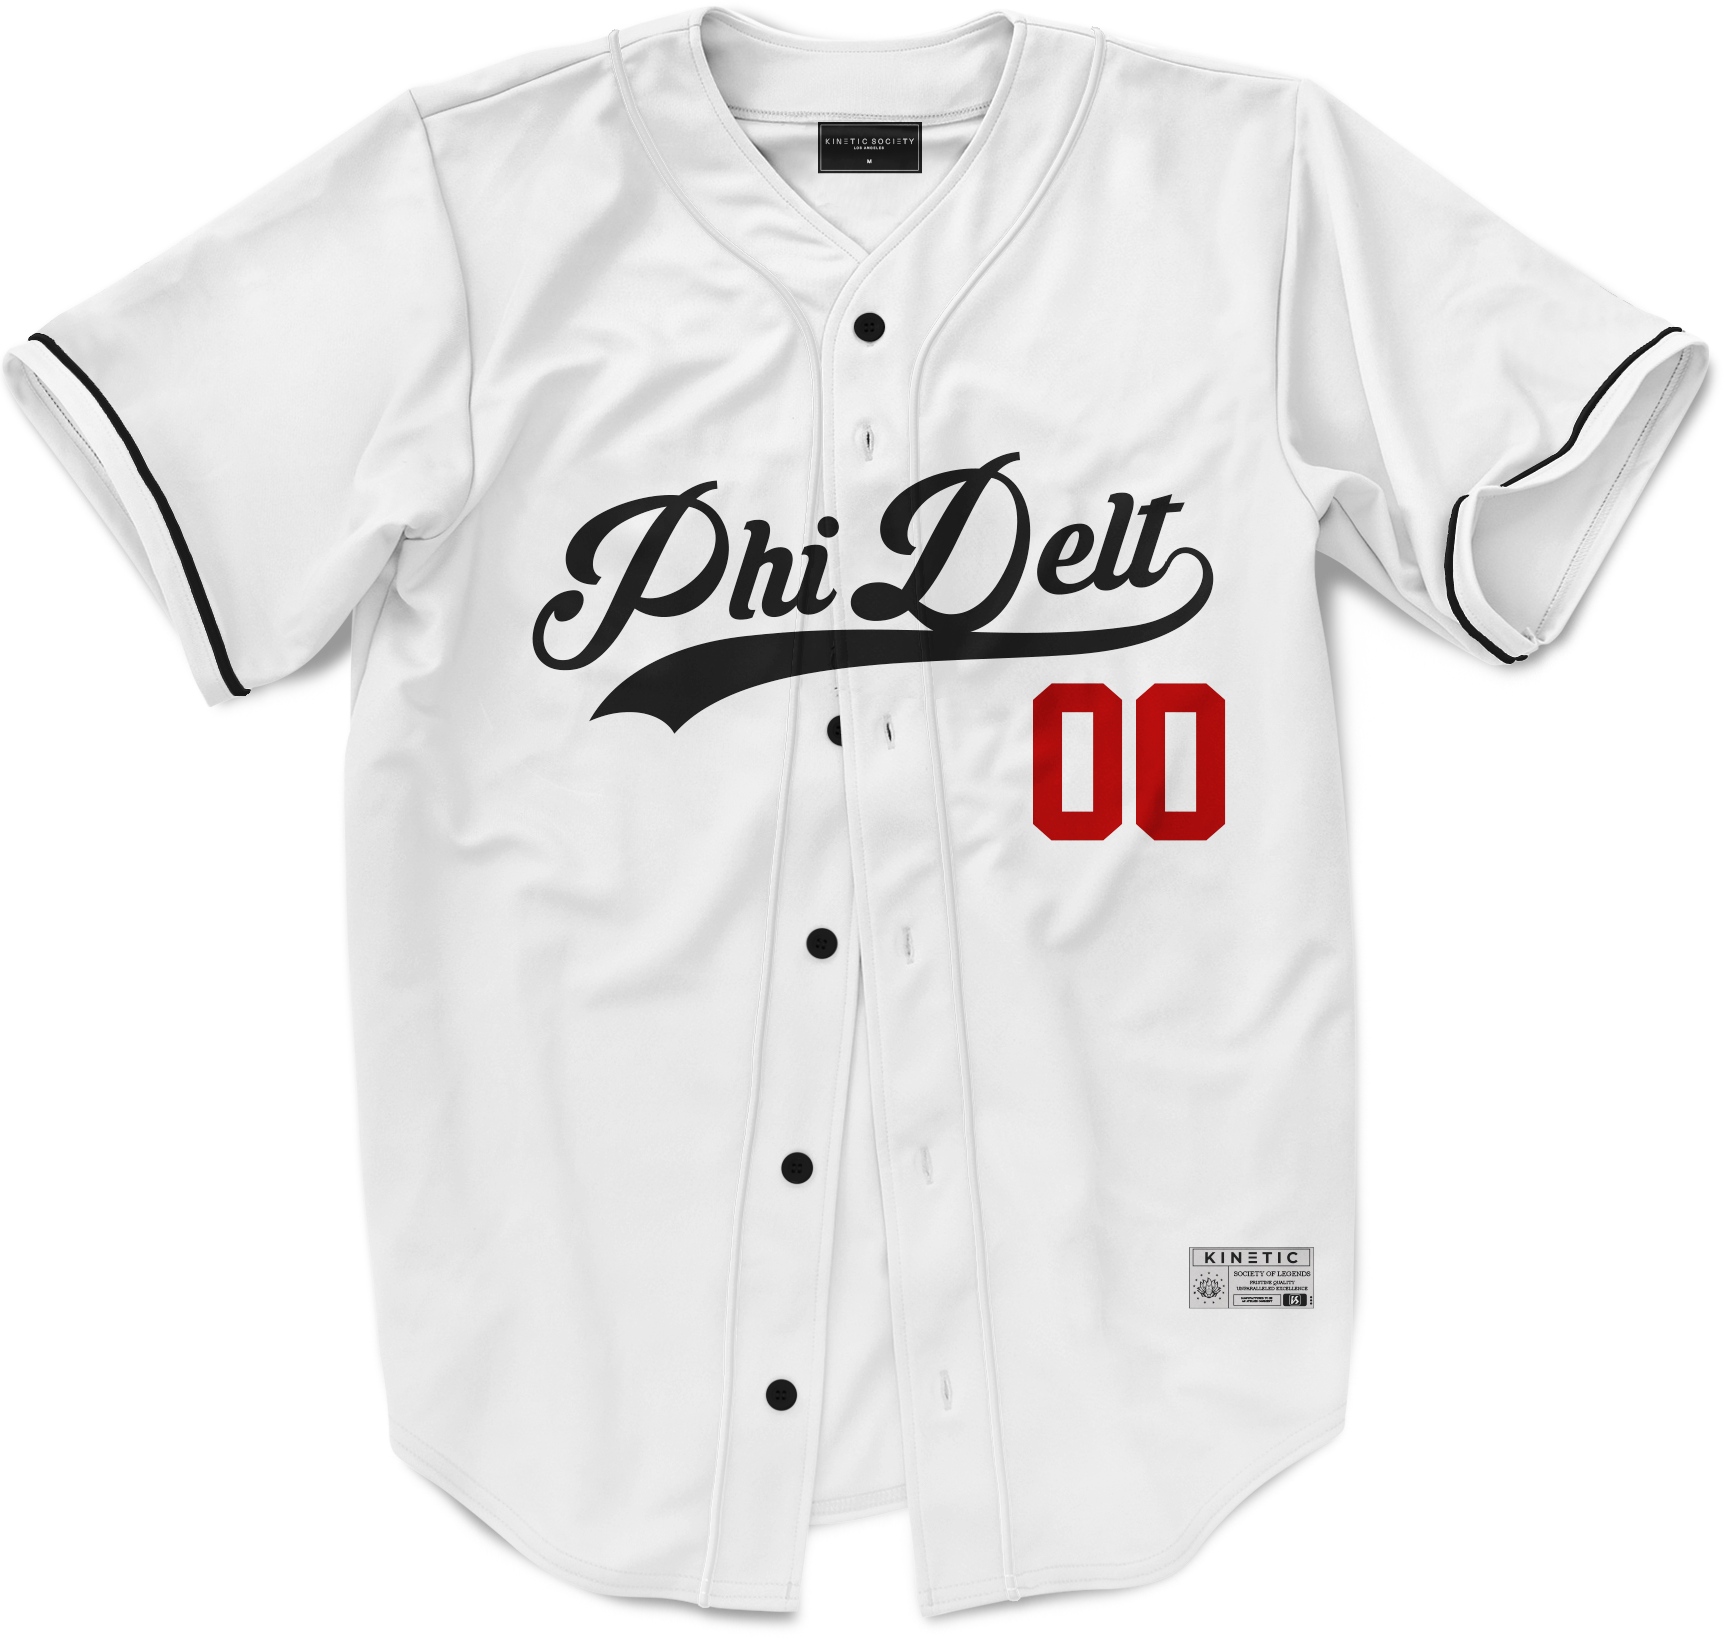 Phi Delta Theta - Classic Ballpark Red Baseball Jersey